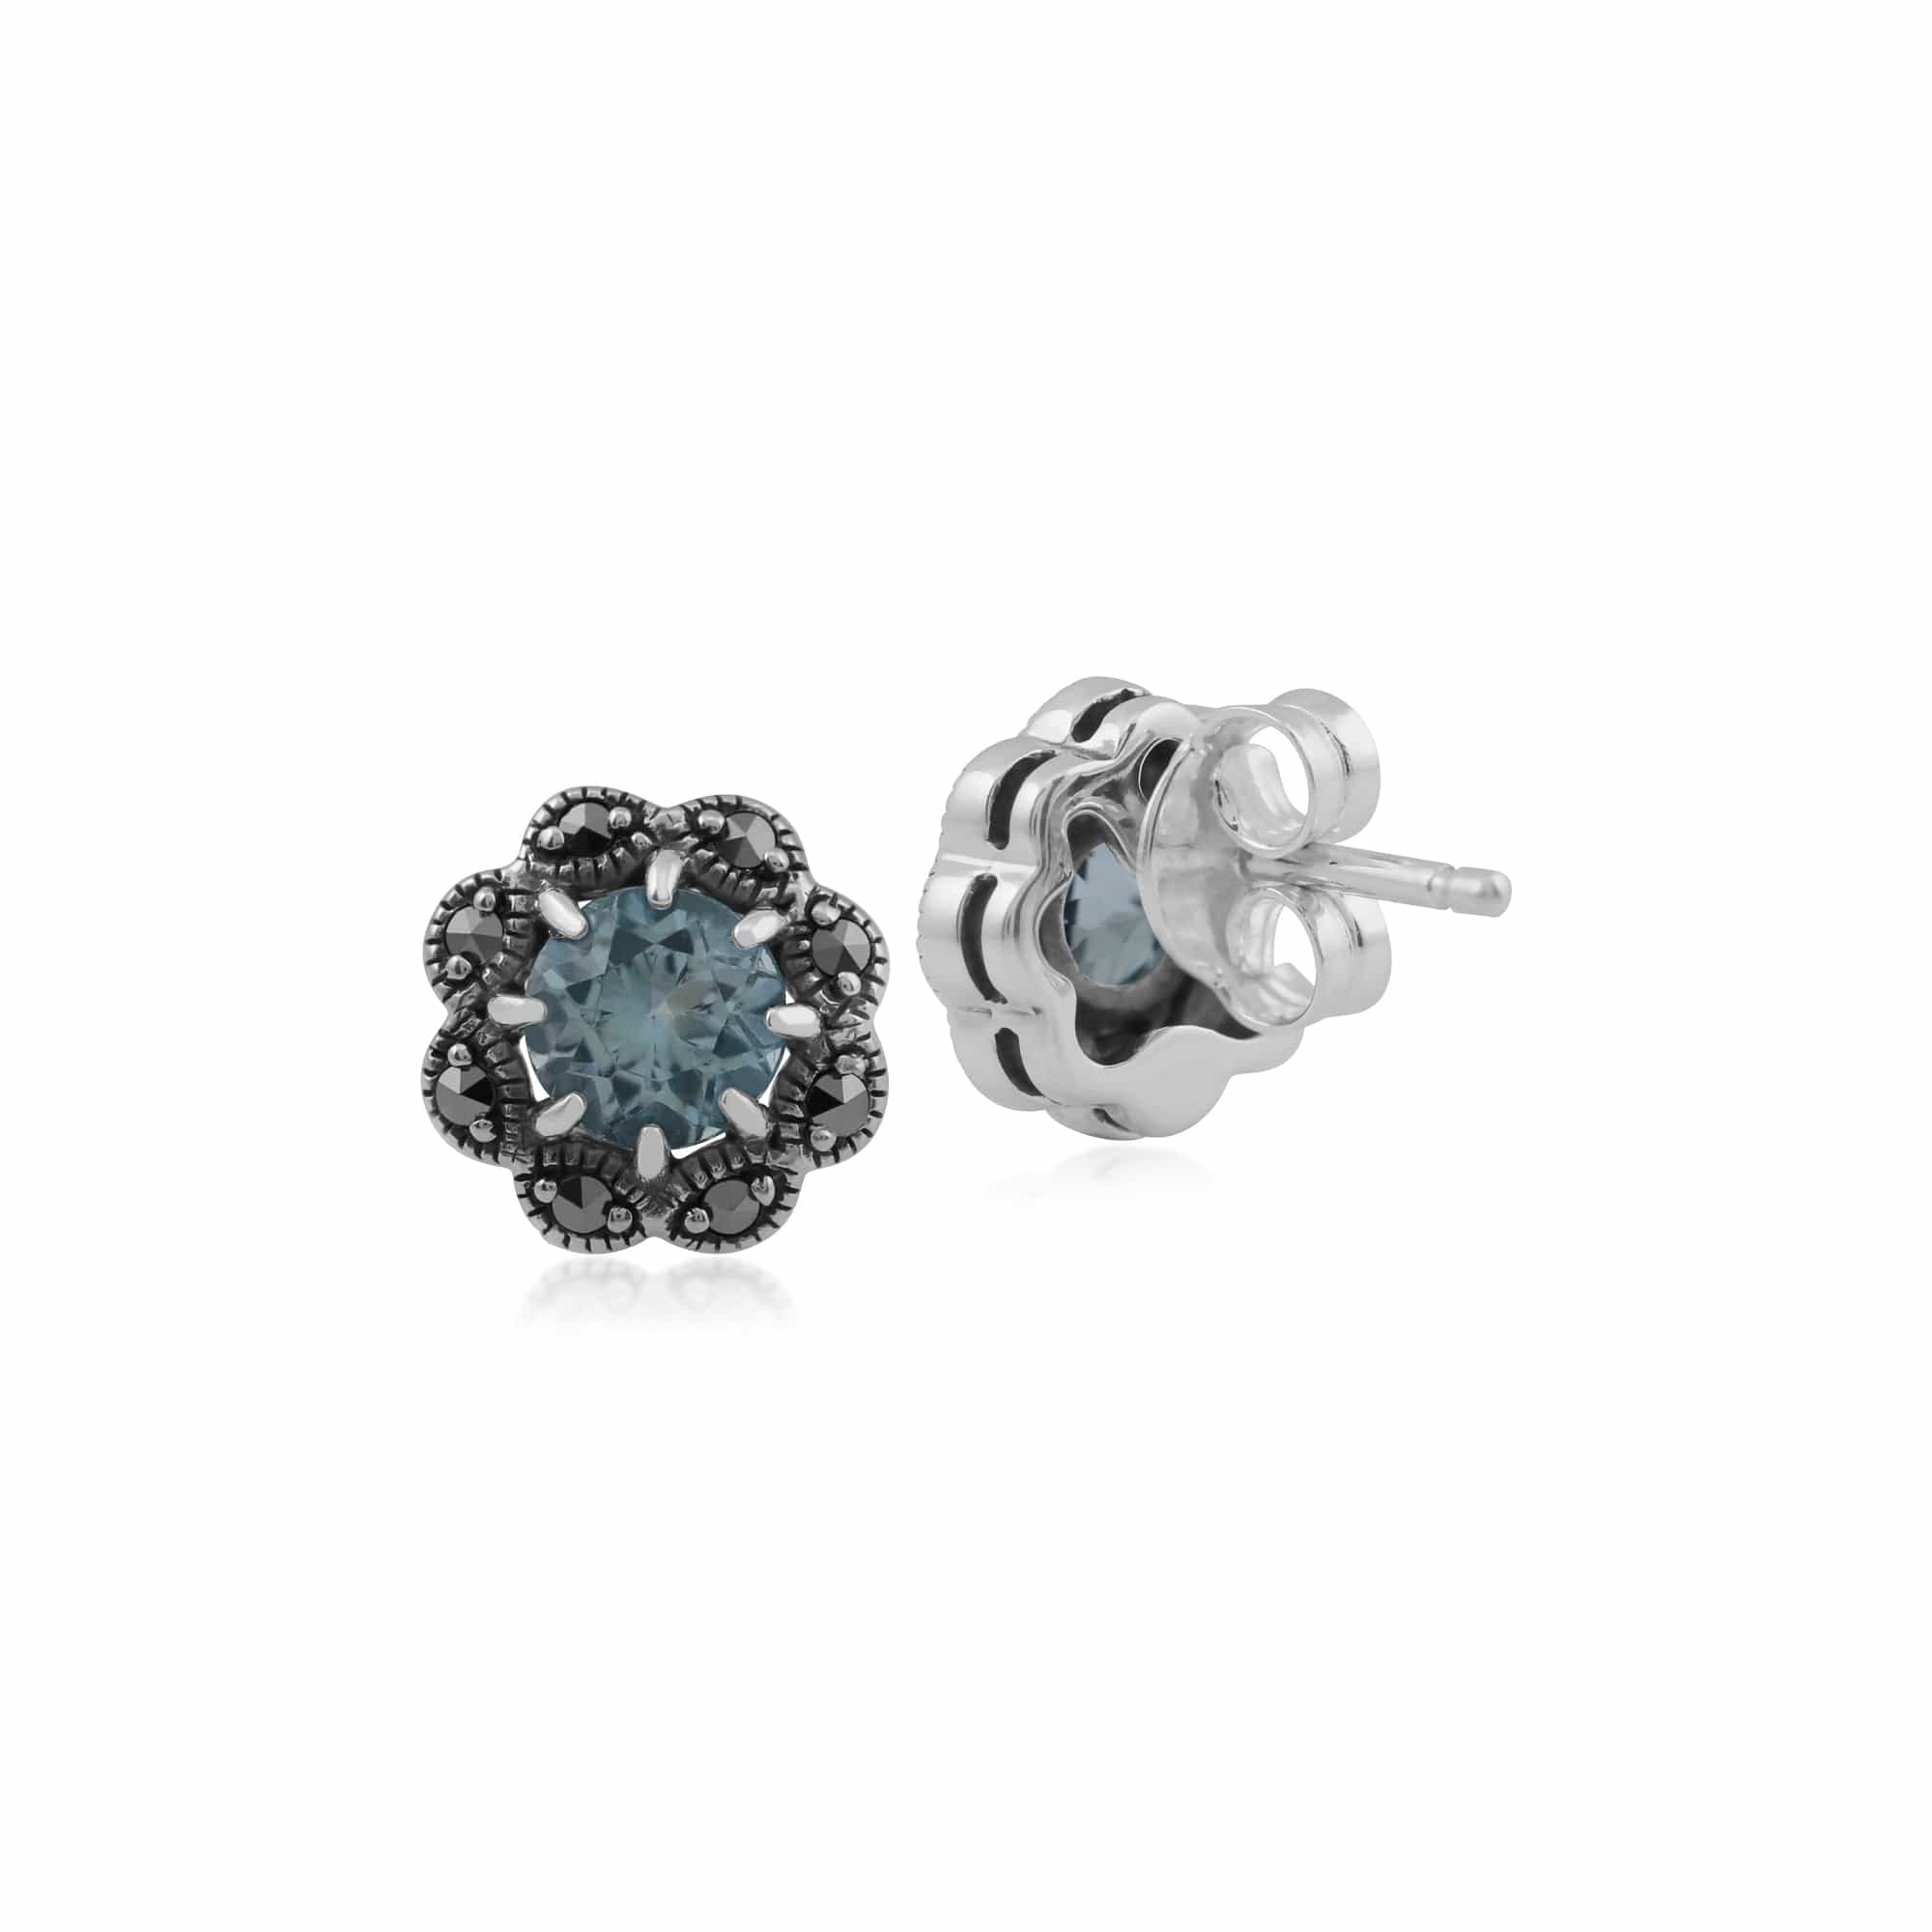 Floral Round Blue Topaz & Marcasite Cluster Stud Earrings in 925 Sterling Silver - Gemondo